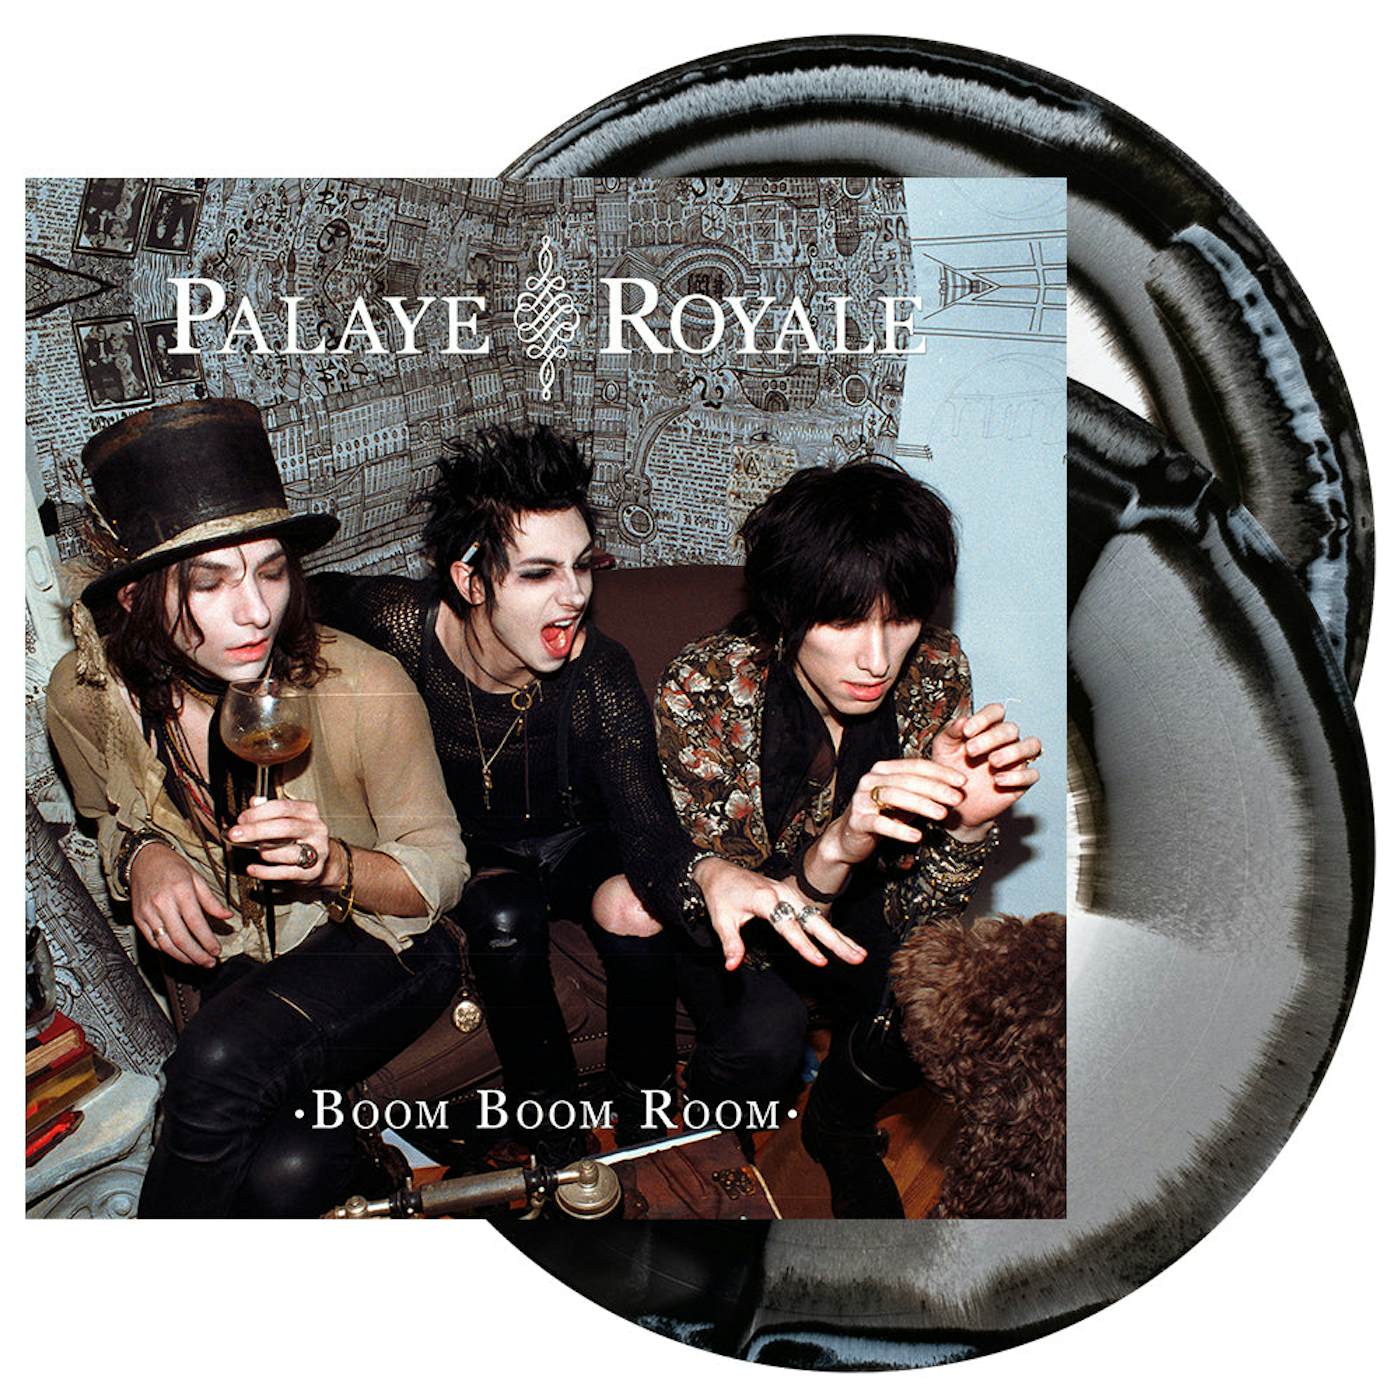 Palaye Royale - 'Boom Boom Room (Side A)' Vinyl (2xLP White + Black + Silver Tri-Color Side A/B)